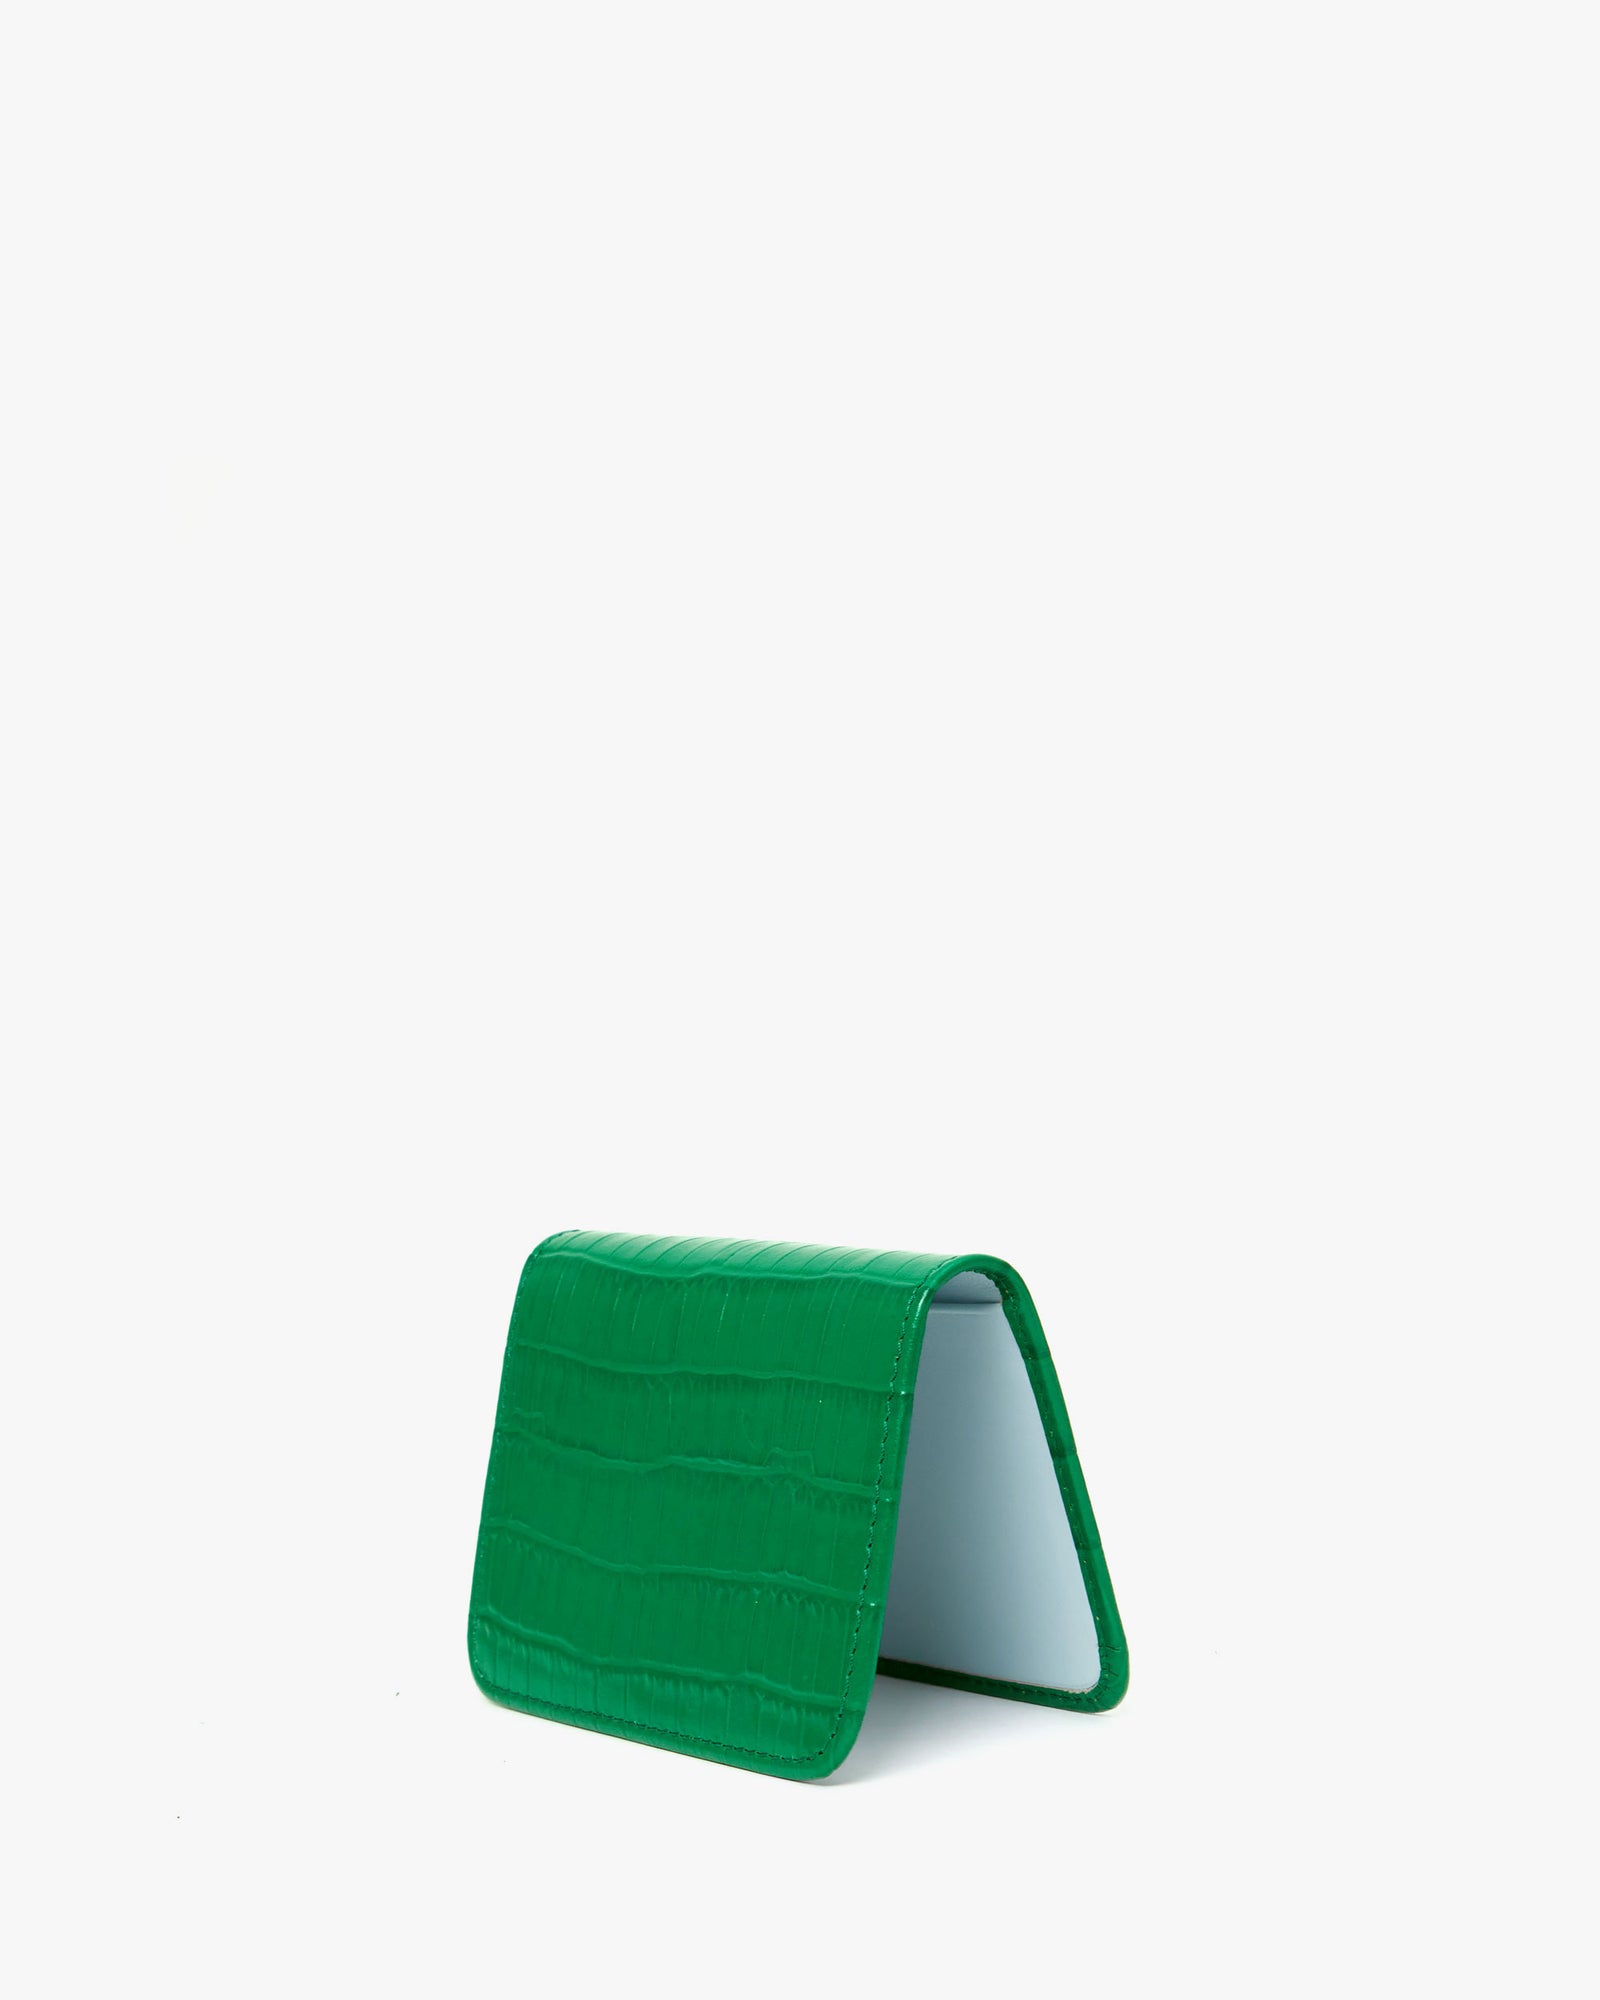 Greenlake Mini Croco Card Case standing slightly open